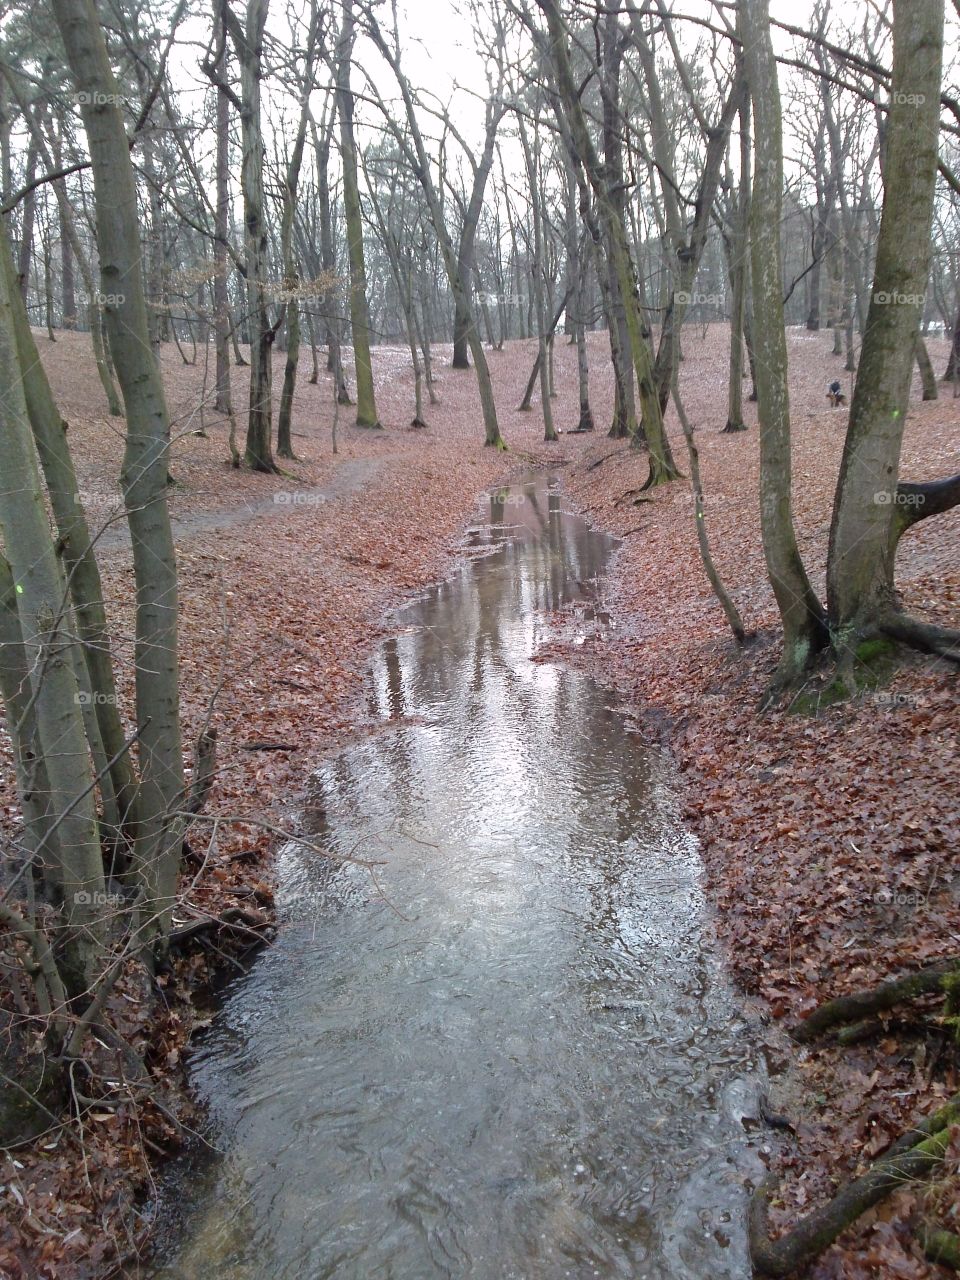 forest stream